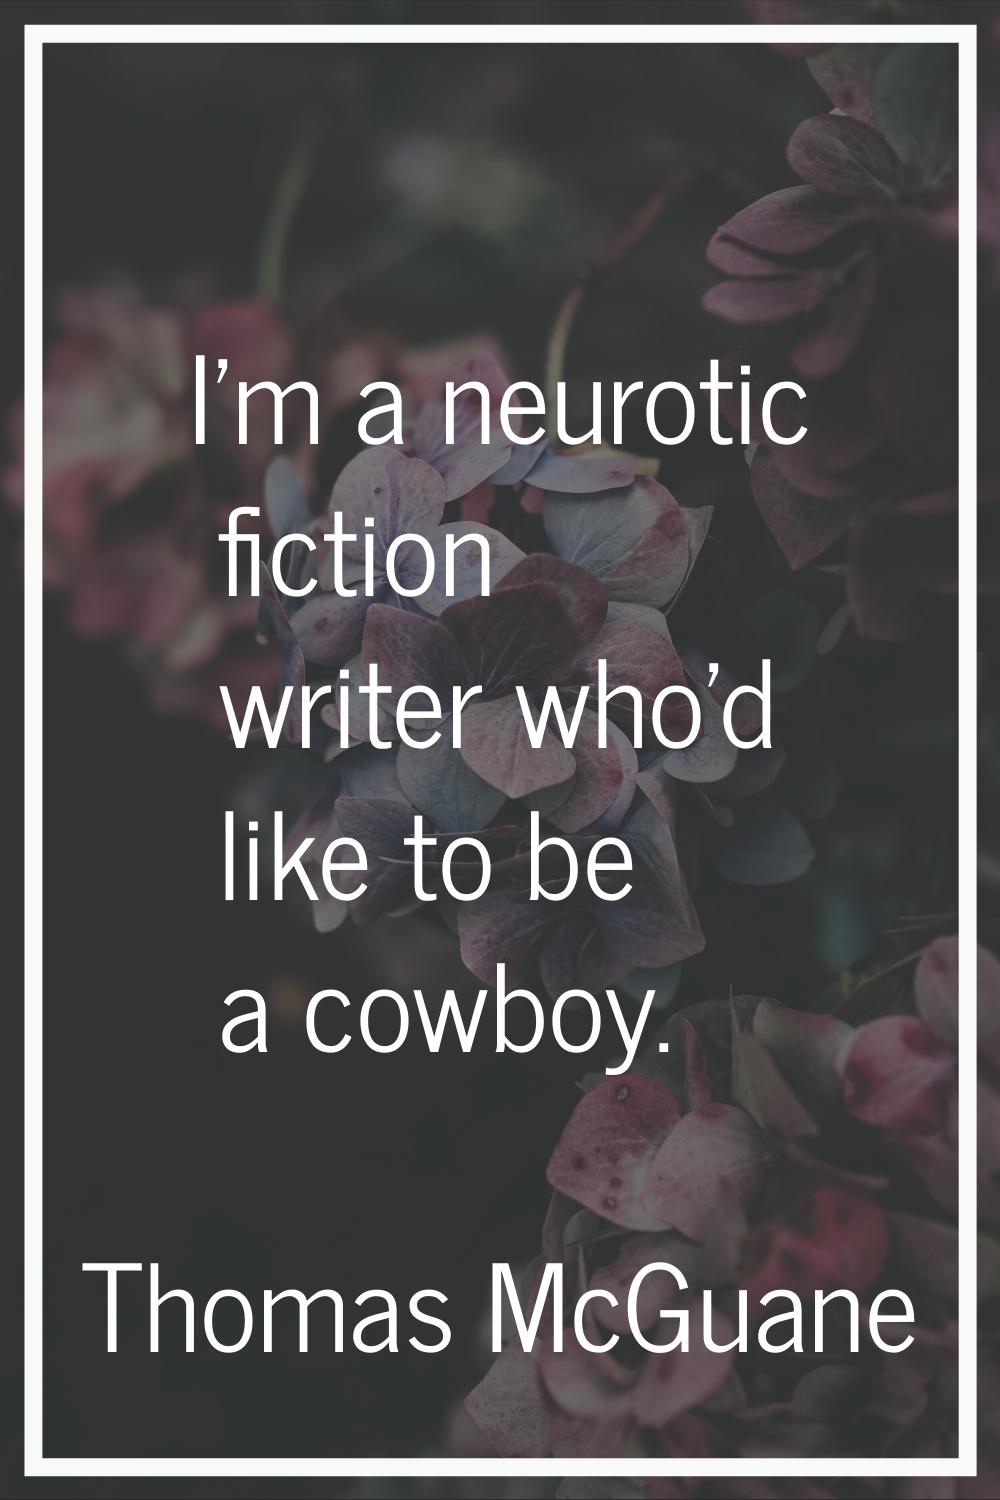 I'm a neurotic fiction writer who'd like to be a cowboy.